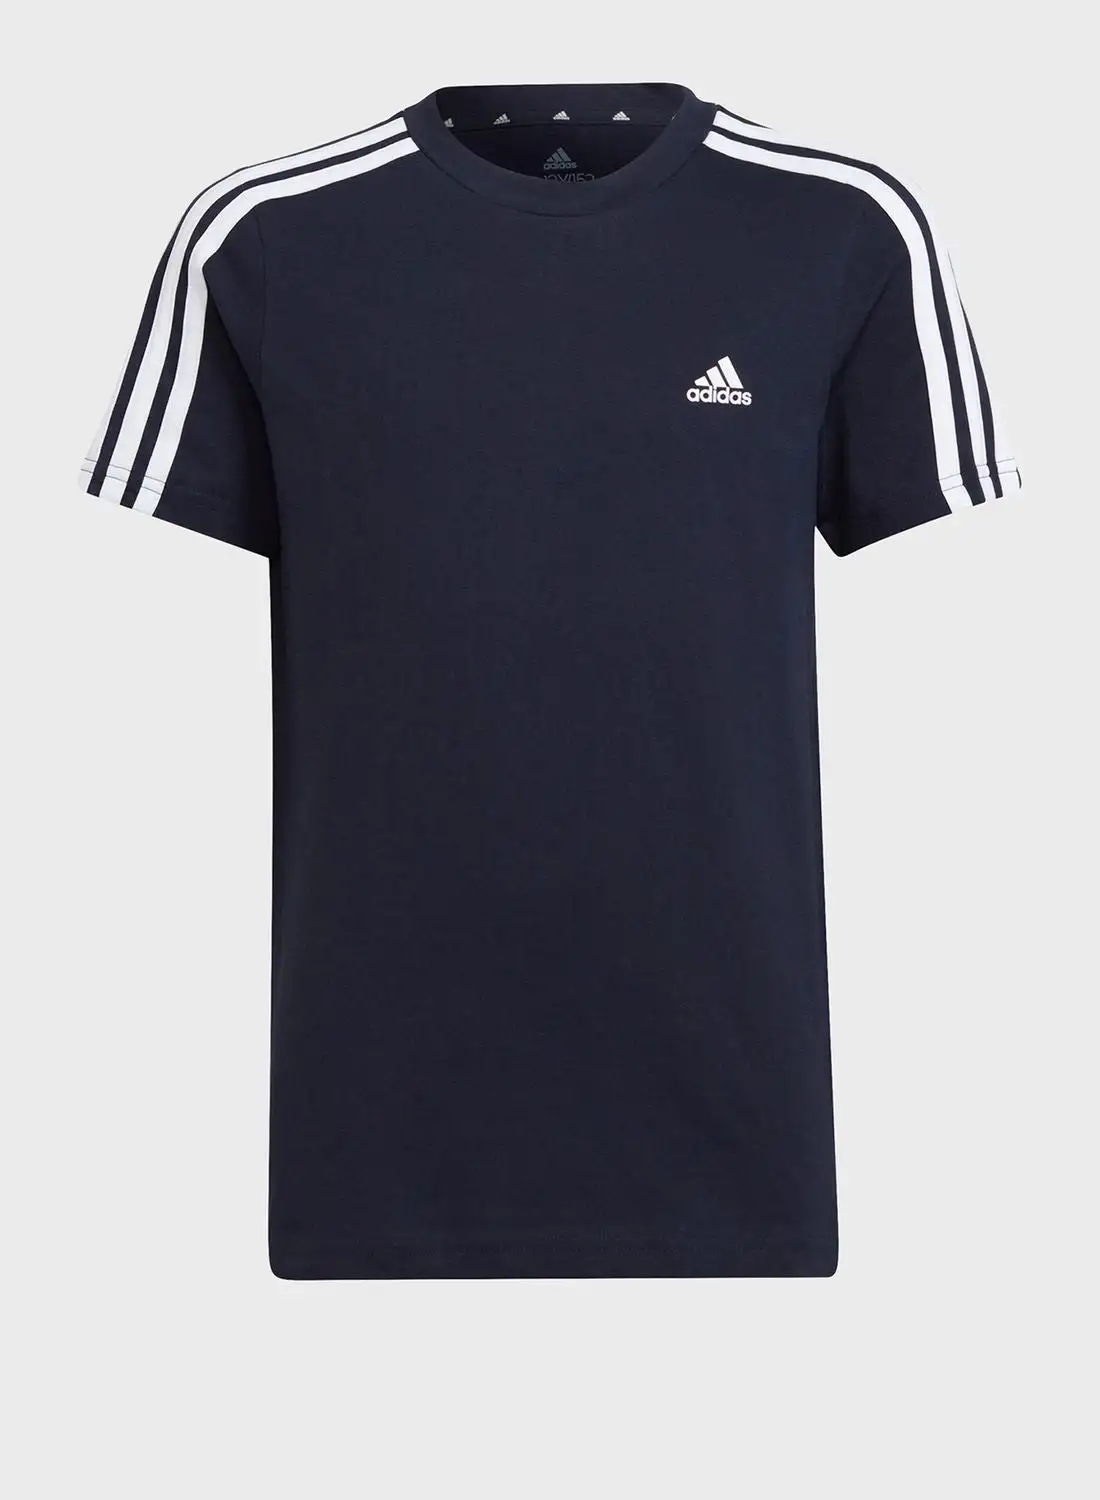 Adidas Youth 3 Stripe T-Shirt